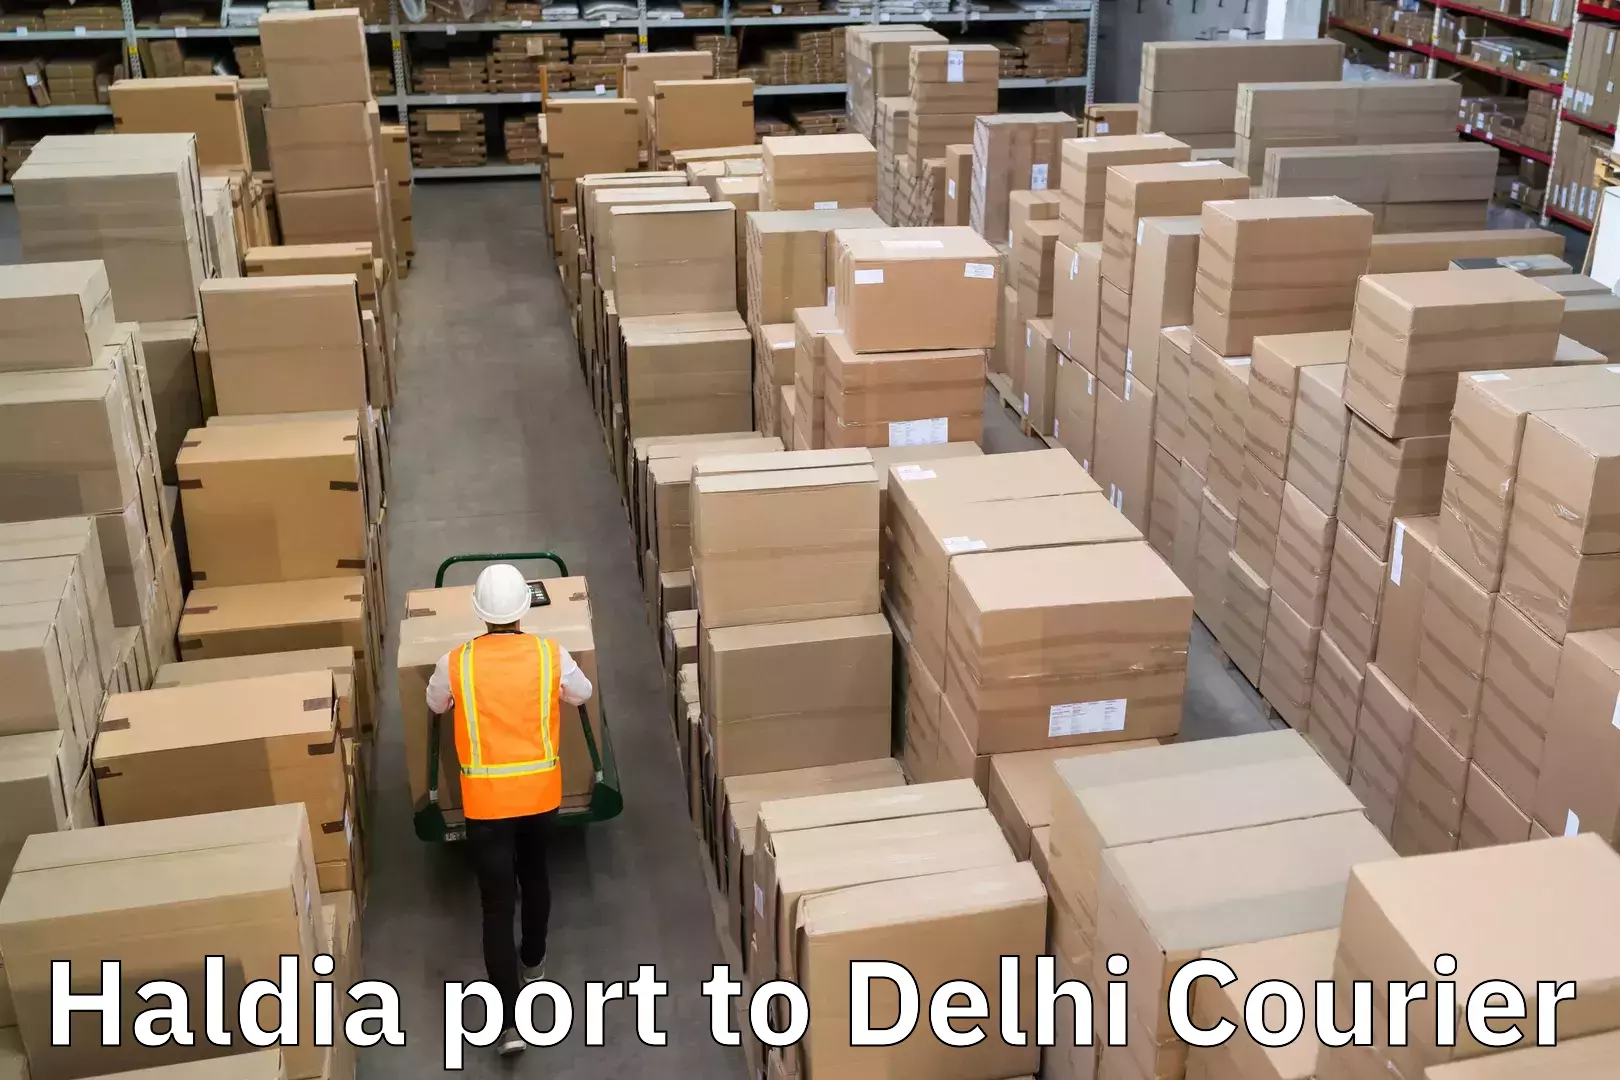 Express delivery capabilities Haldia port to Delhi